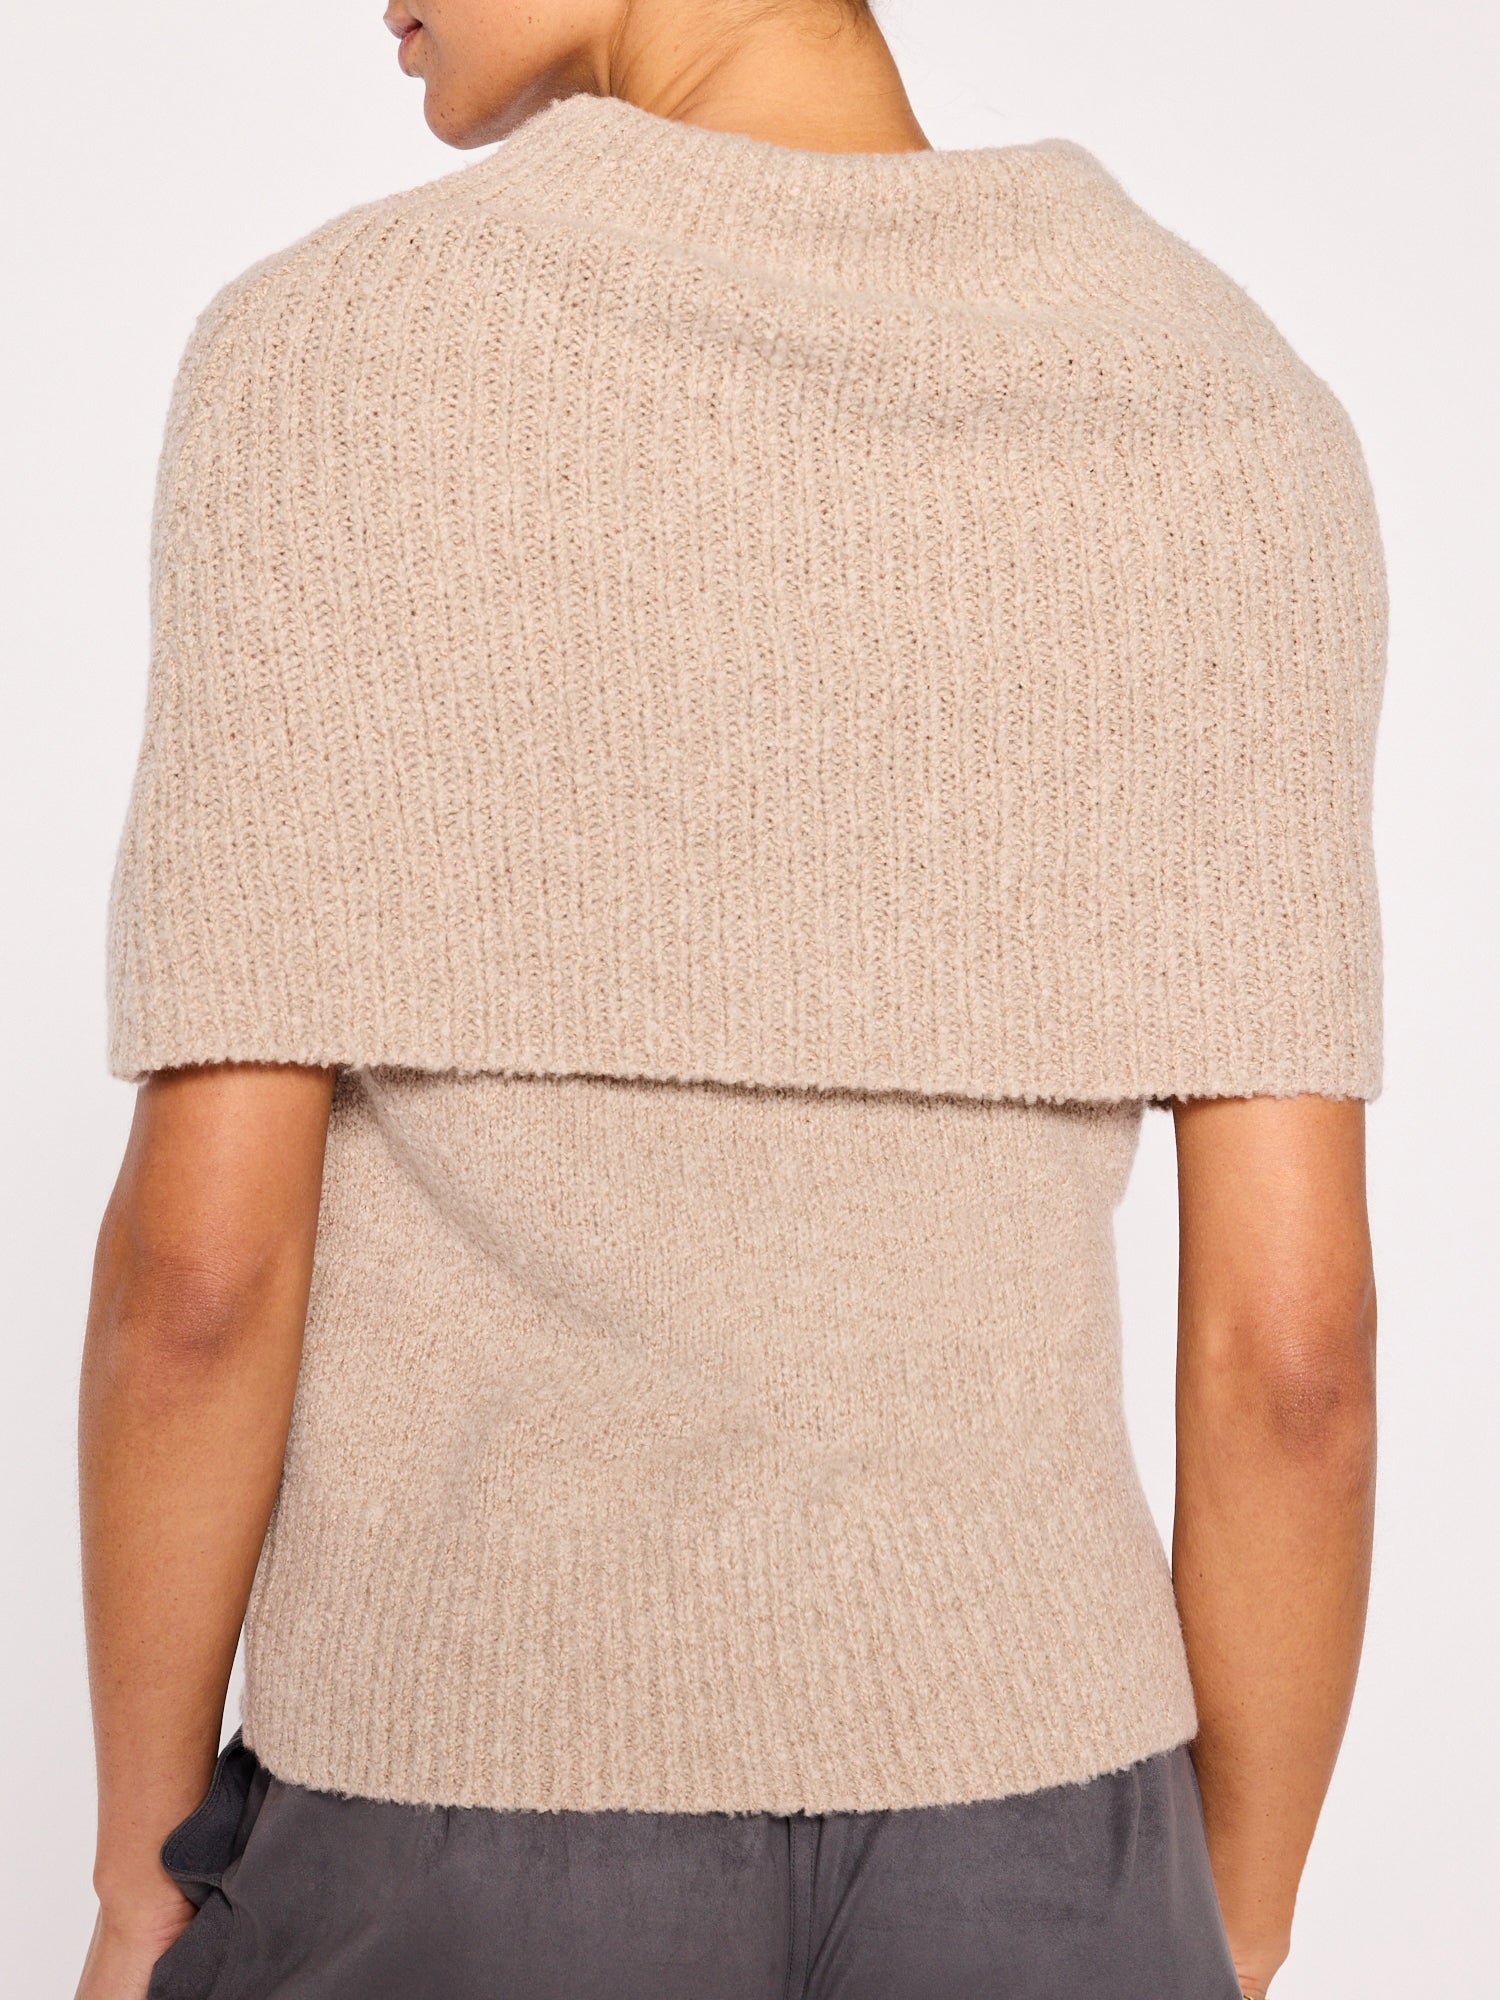 Hayden cape neck tan short sleeve sweater back view